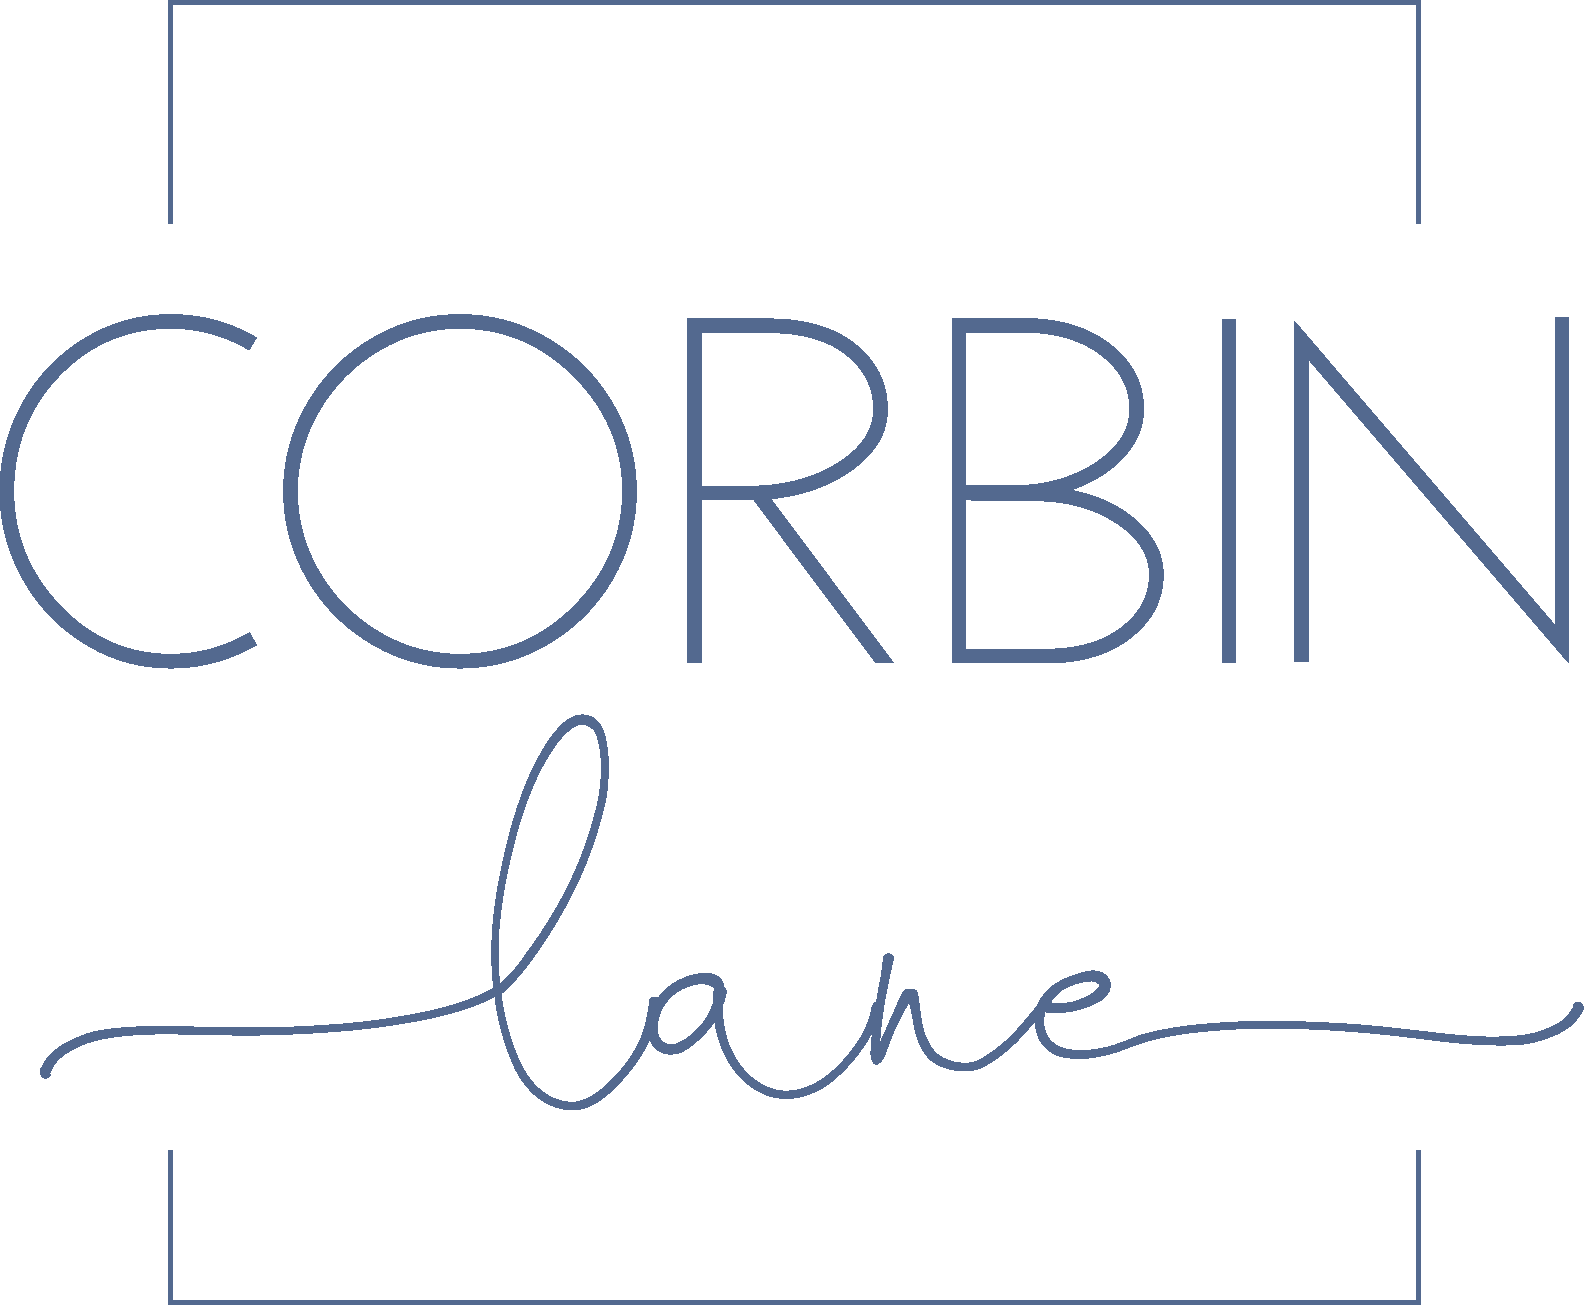 Corbin Lane